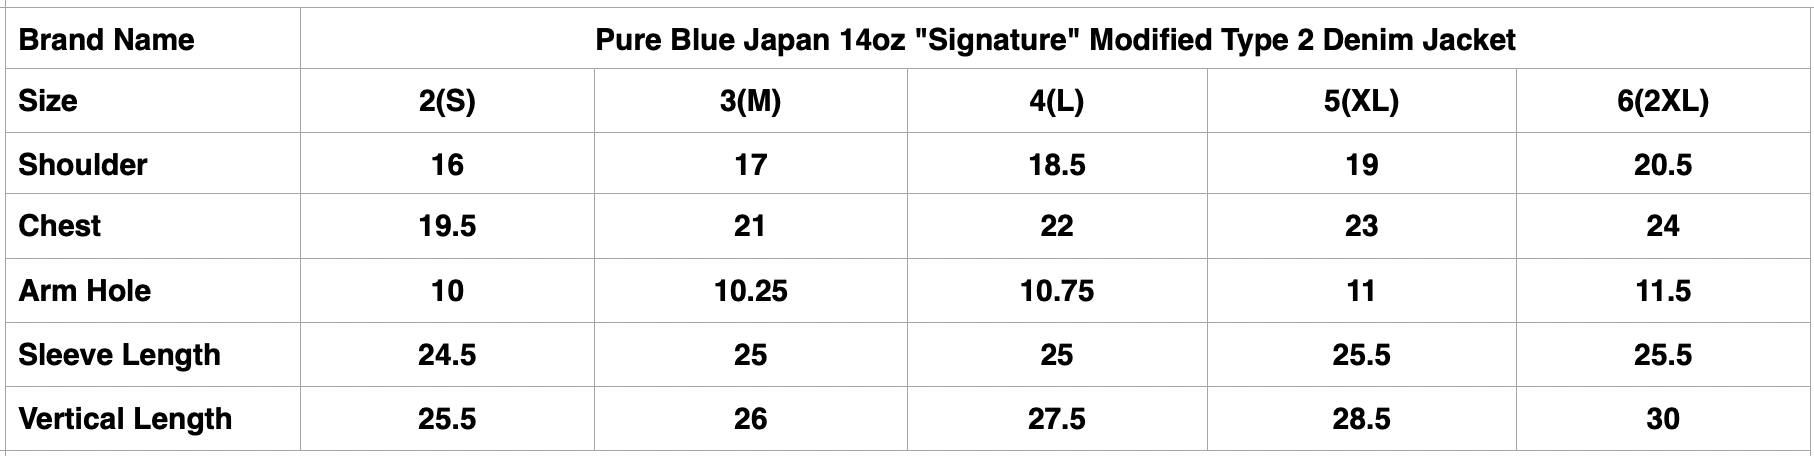 Pure Blue Japan 14oz "Signature" Modified Type 2 Denim Jacket